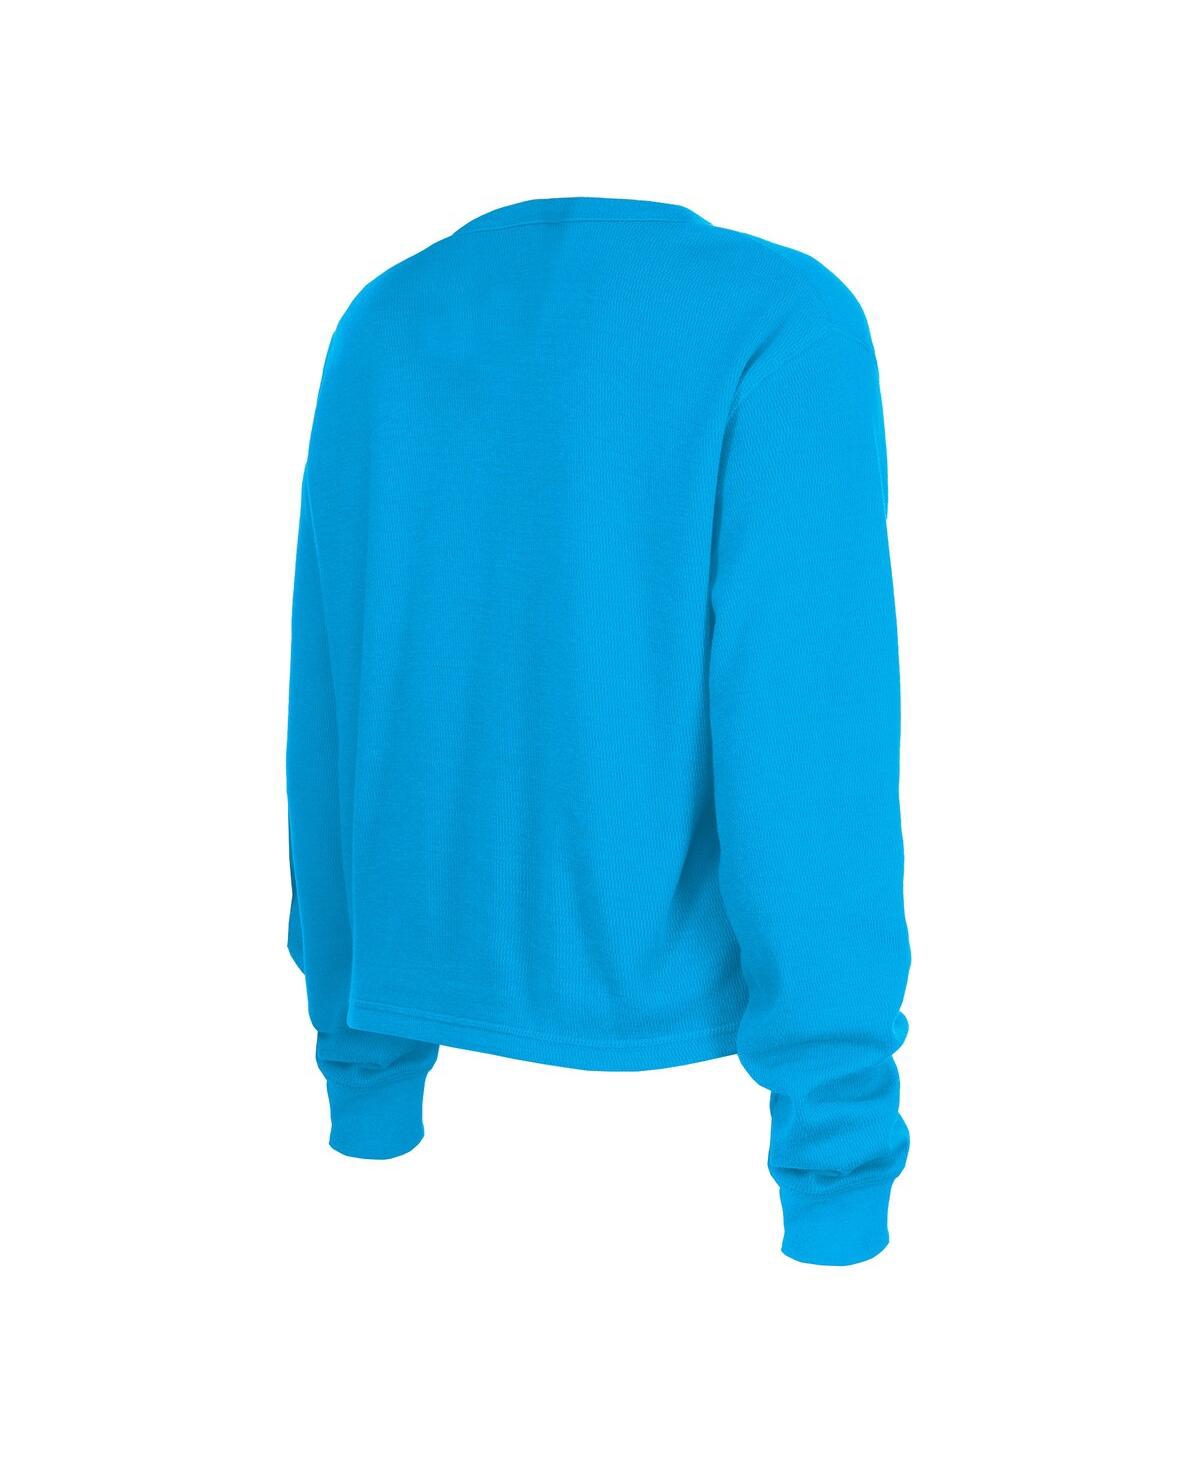 Shop New Era Women's  Blue Carolina Panthers Thermal Crop Long Sleeve T-shirt